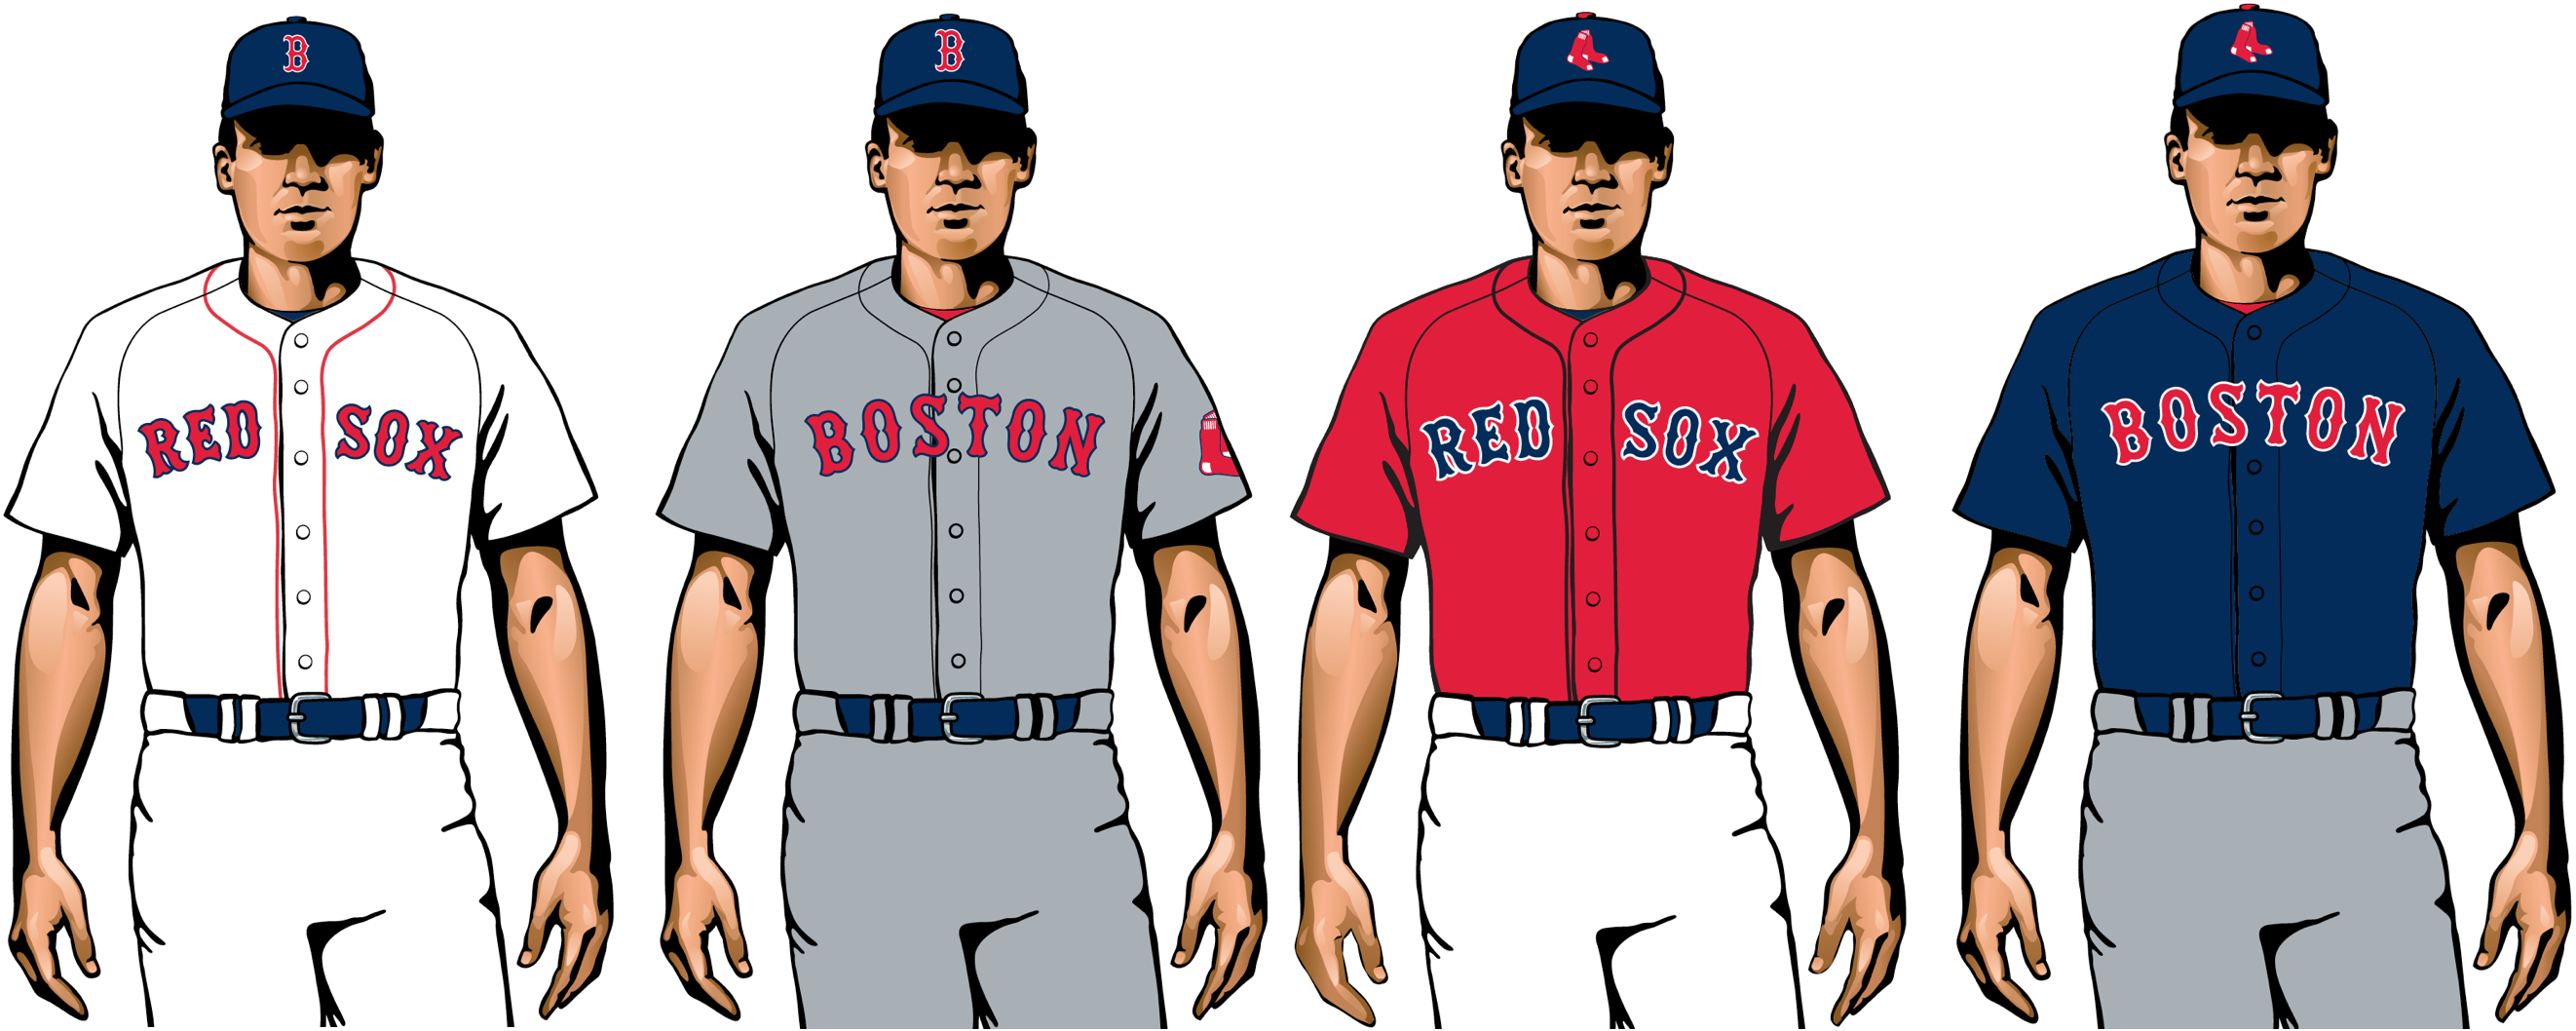 boston red sox 2020 uniforms